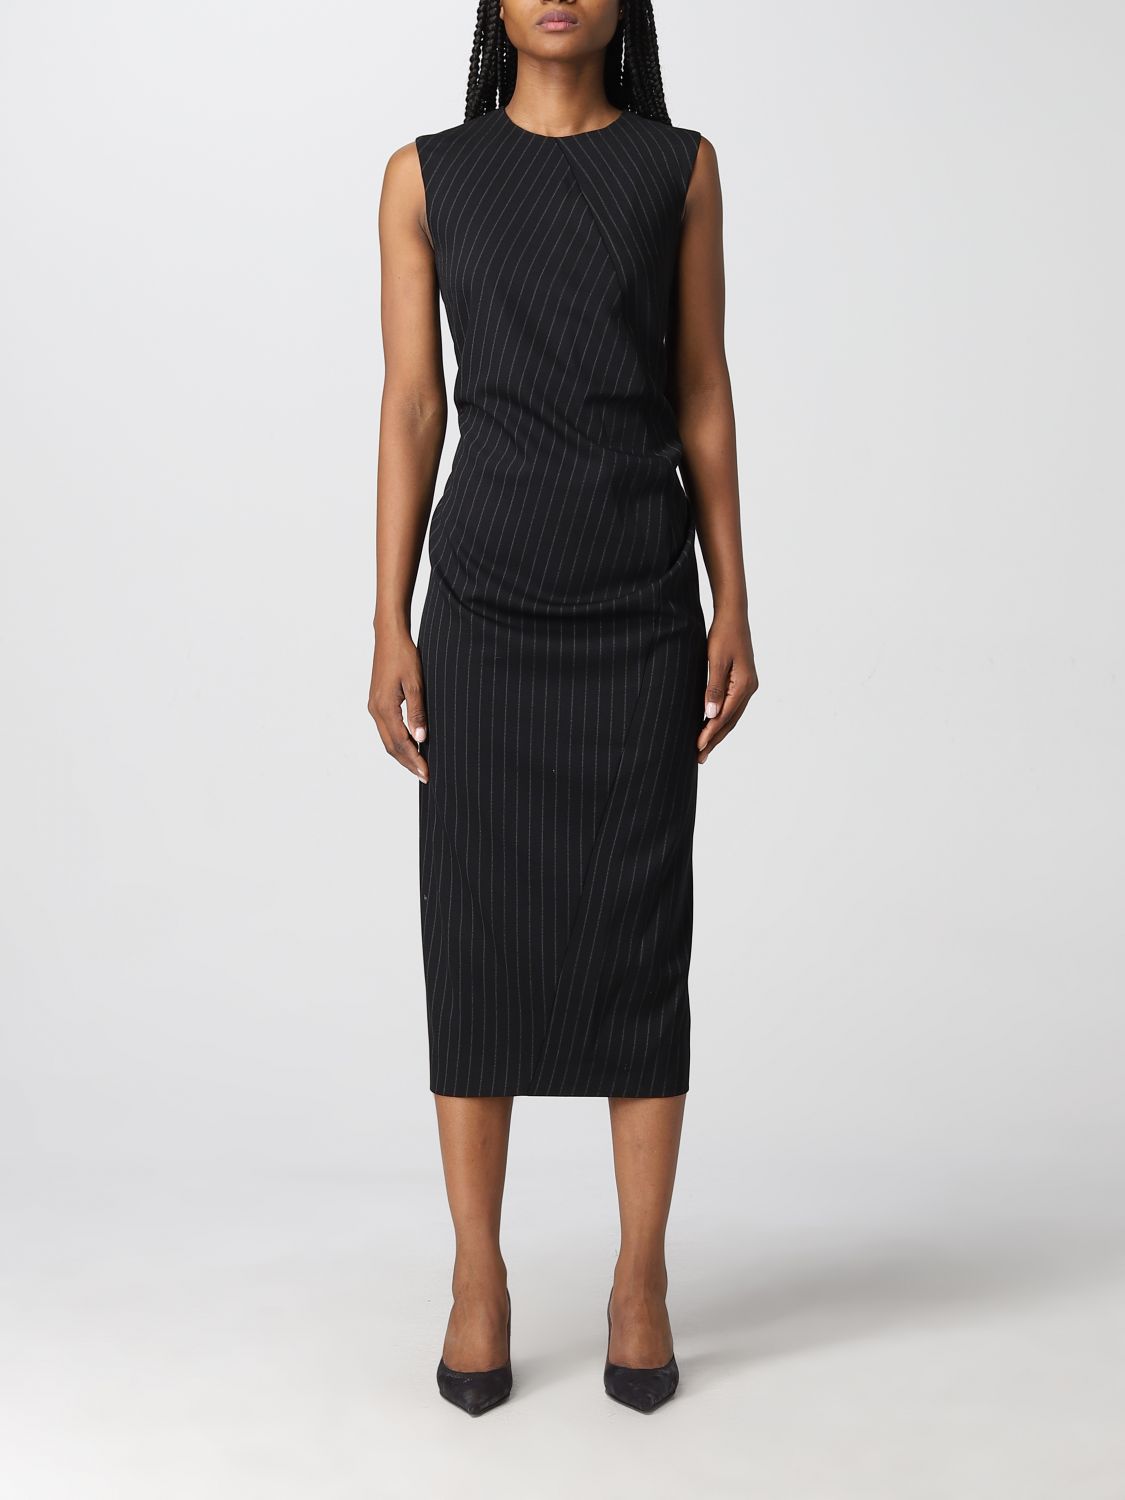 SPORTMAX: dress for woman - Black | Sportmax dress 22261529600 online ...